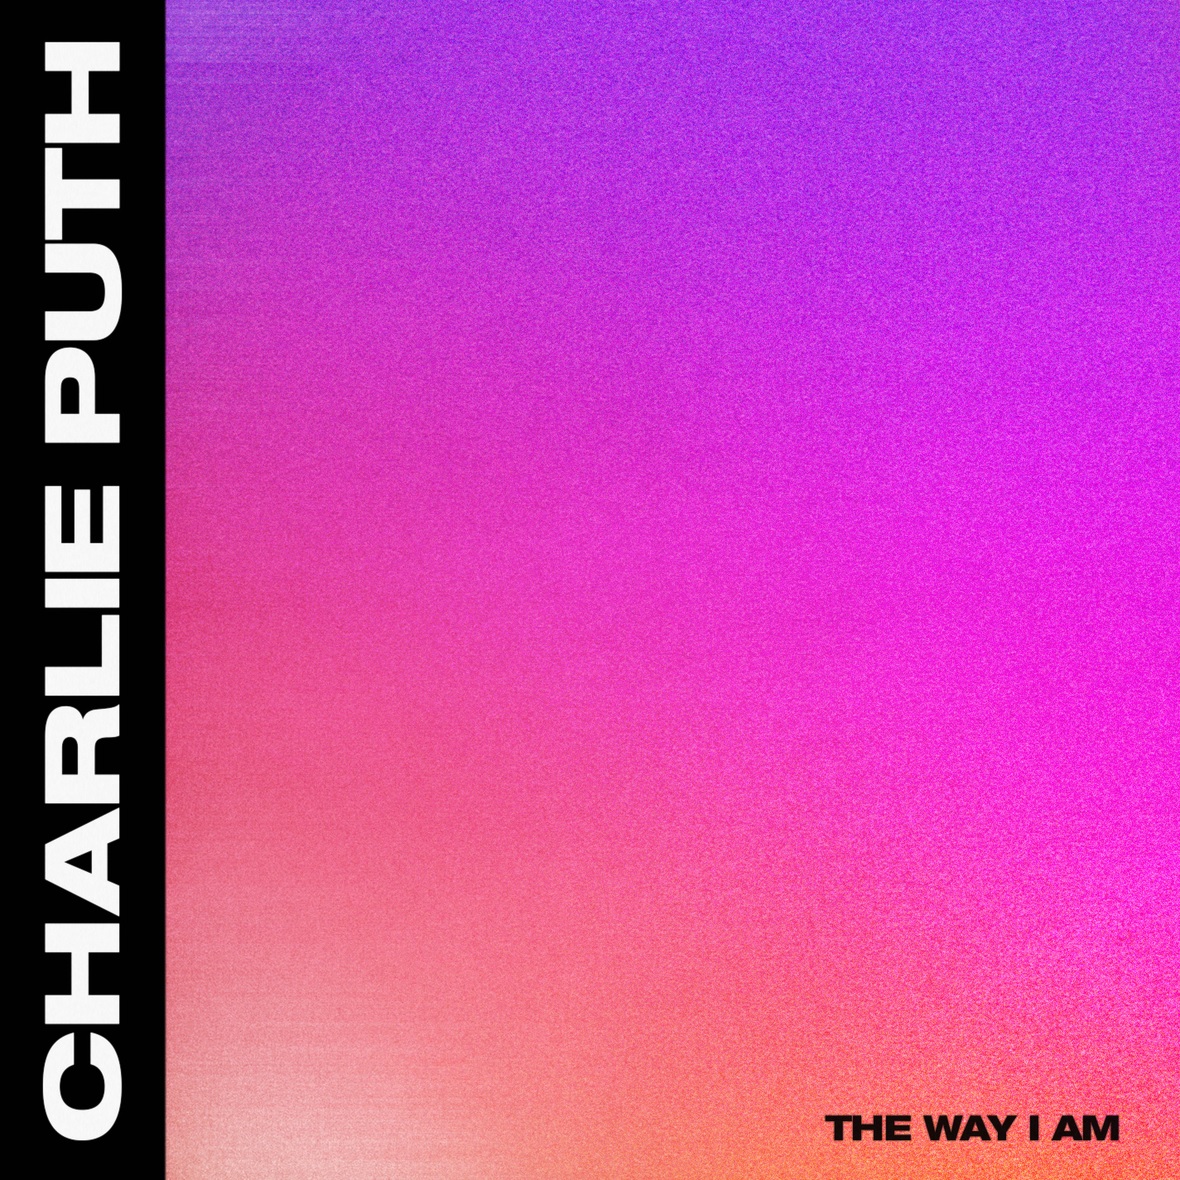 Charlie Puth - The Way I Am